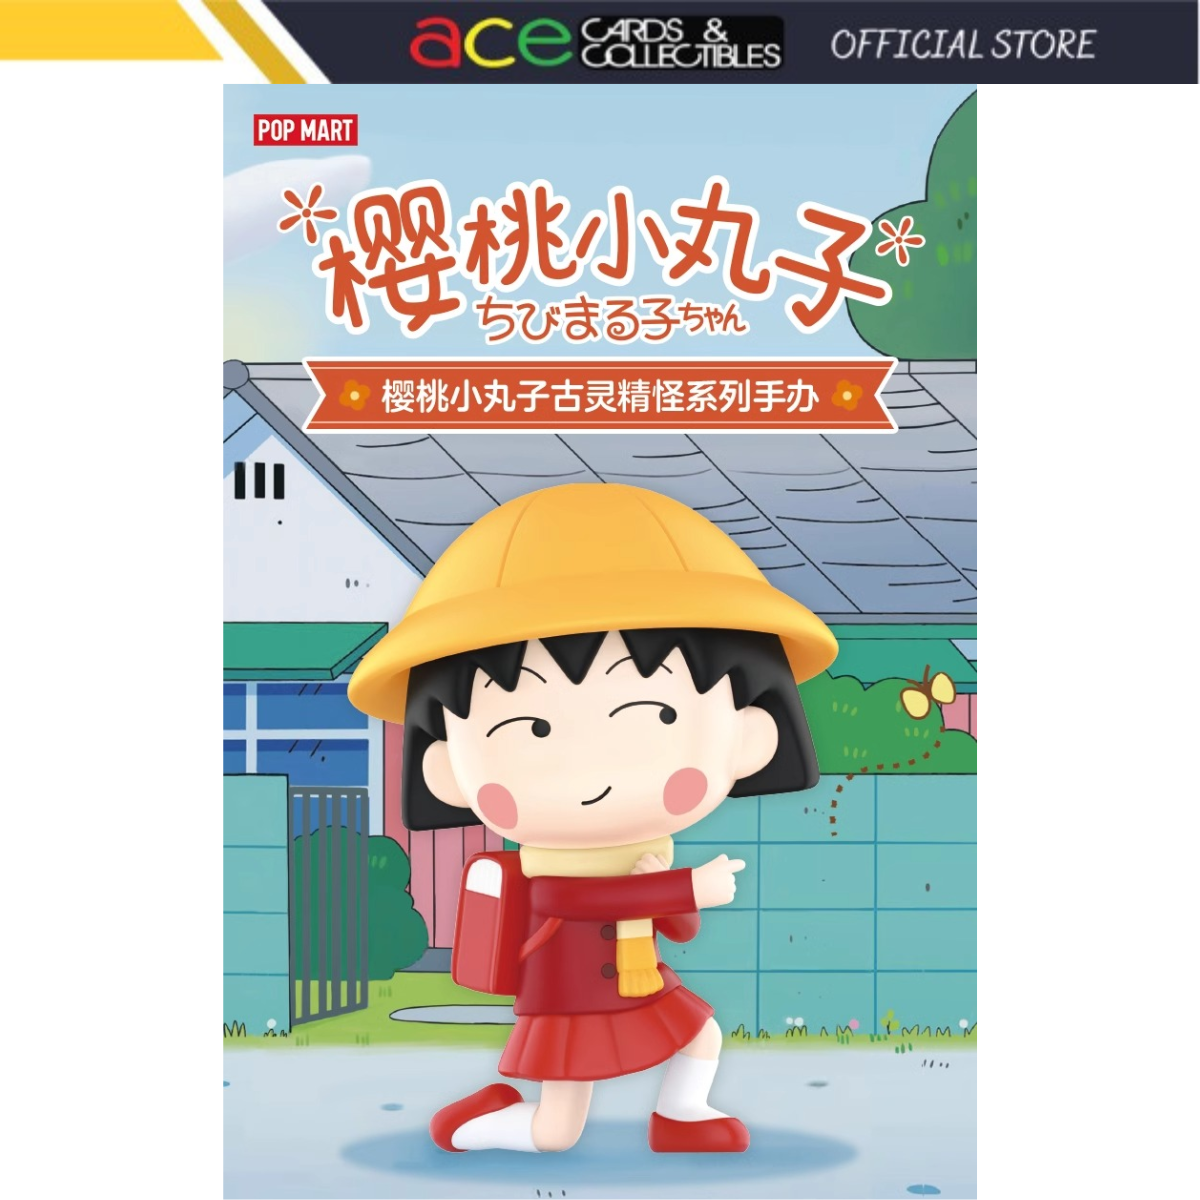 POP MART Chibi Maruko-chan's Quirky Adventures Series-Single Box (Random)-Pop Mart-Ace Cards & Collectibles